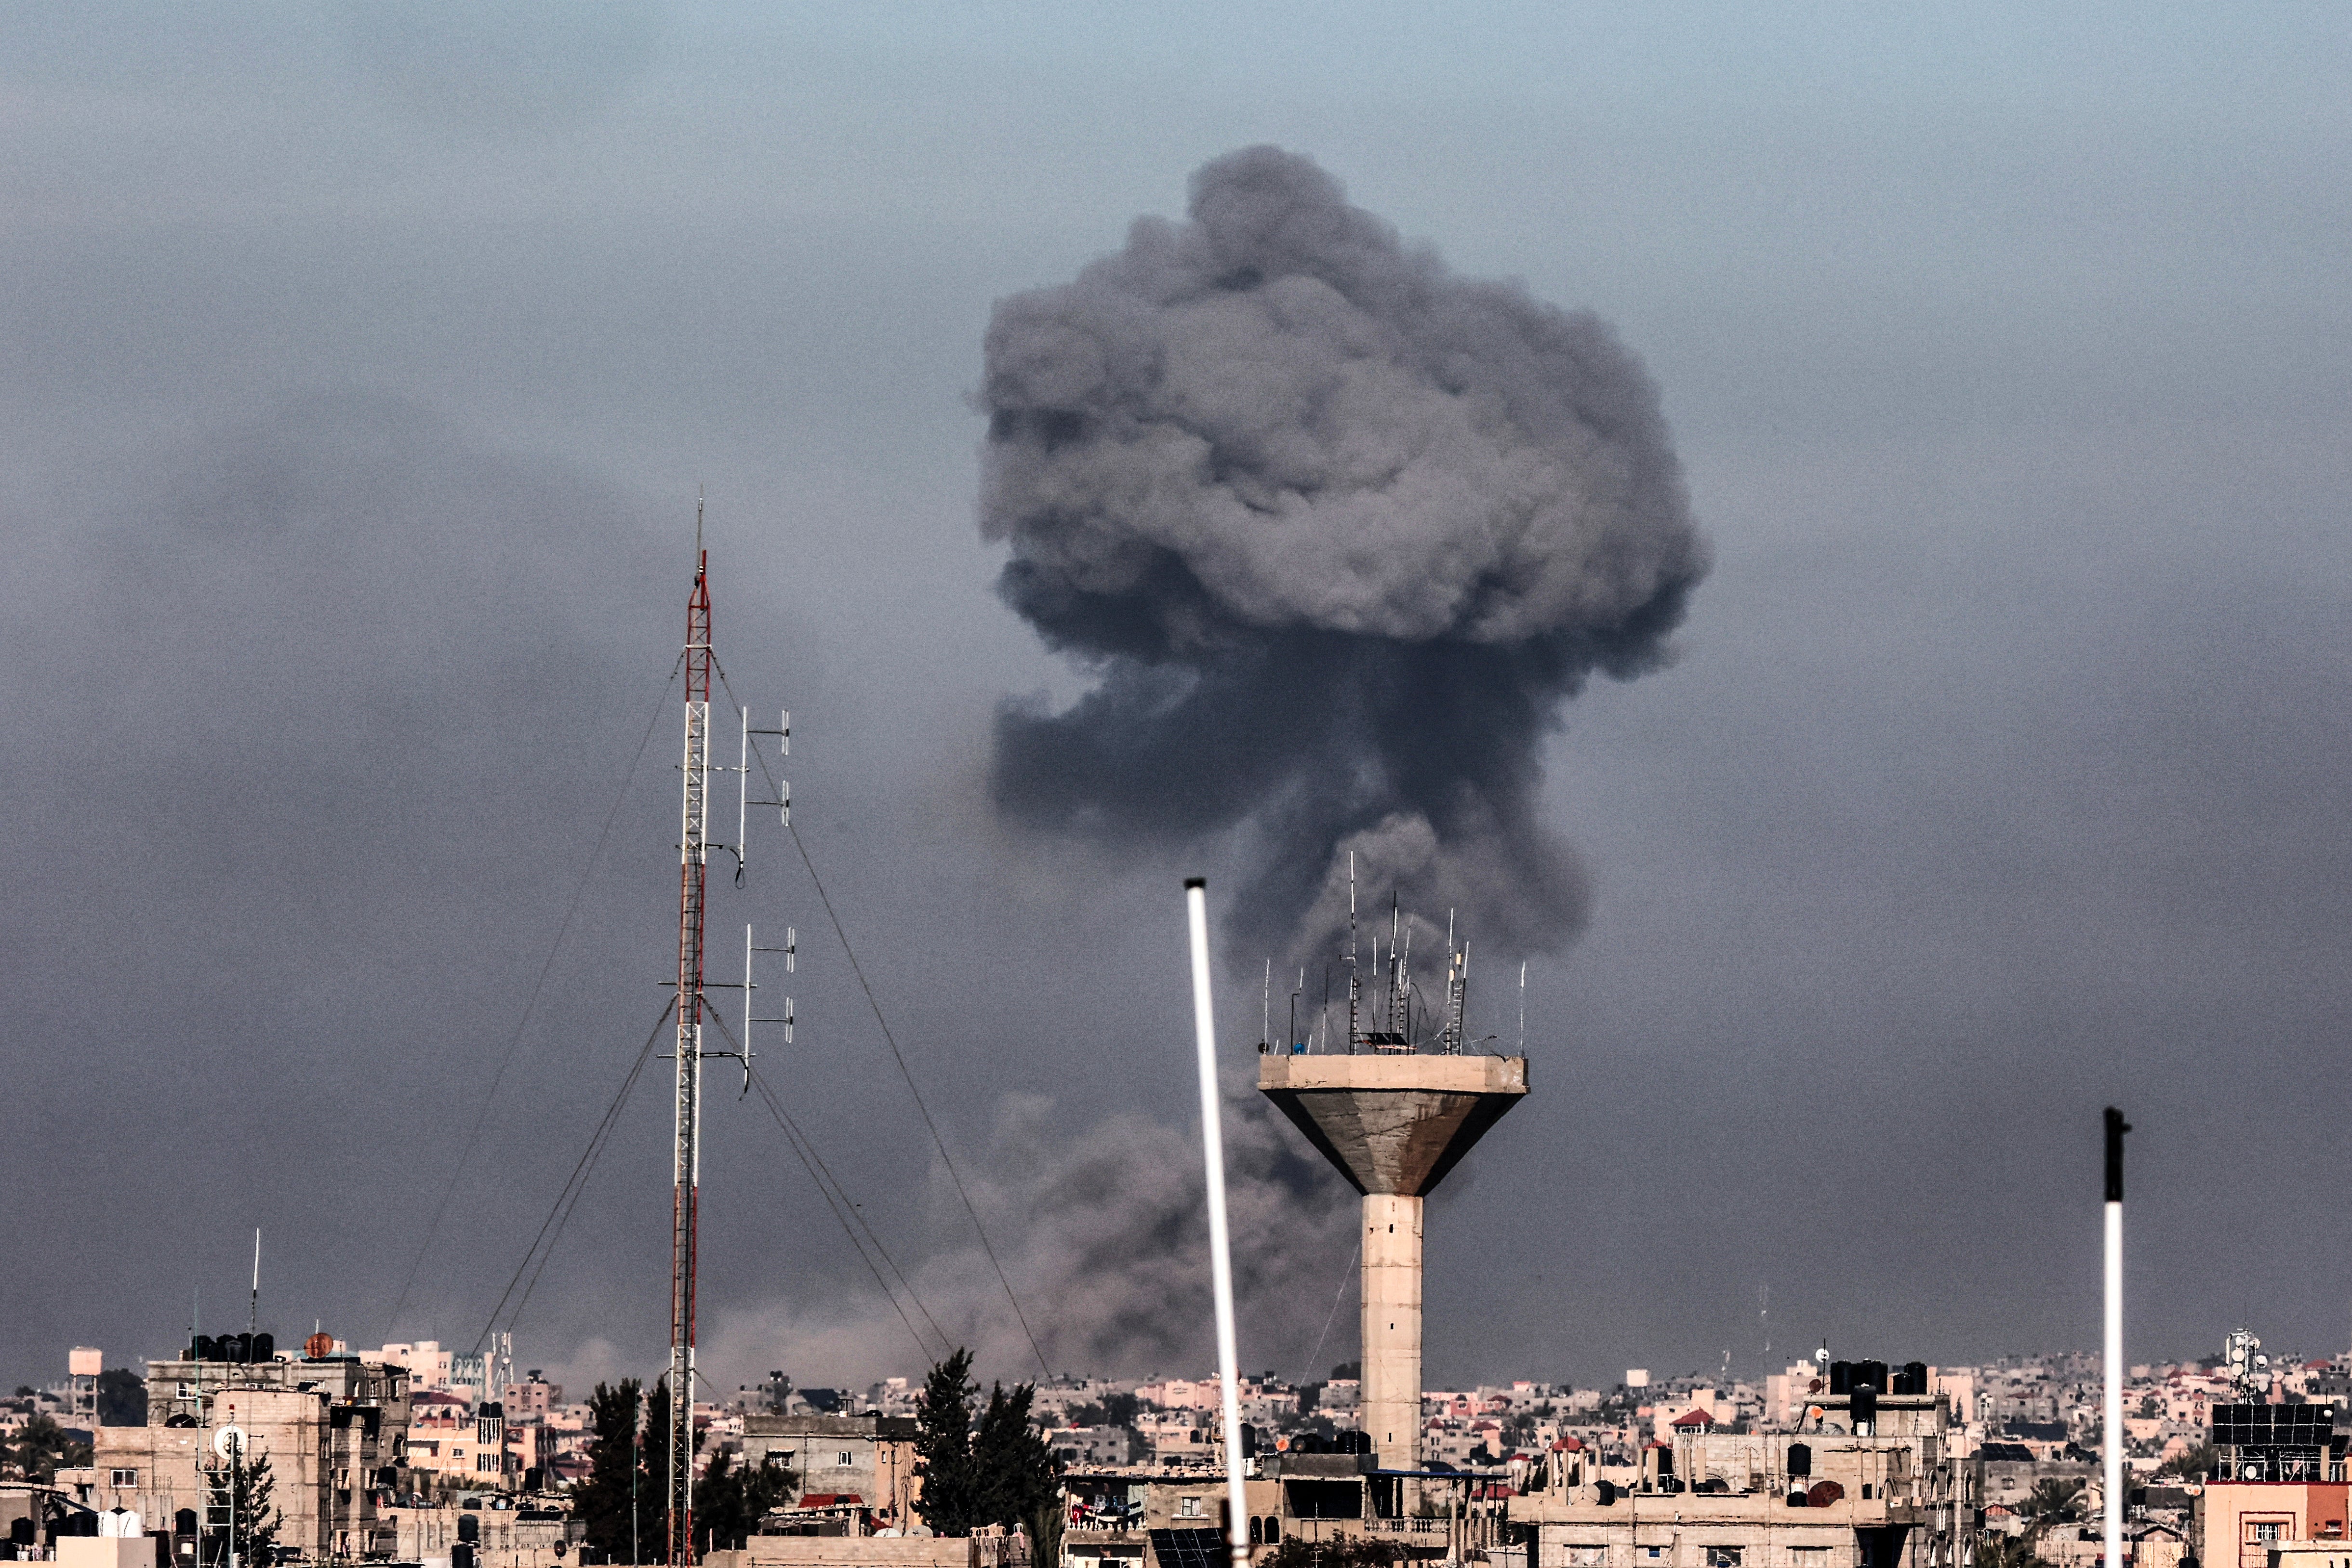 Smoke rising over buildings in Khan Yunis during Israeli bombardment on Feb. 8.